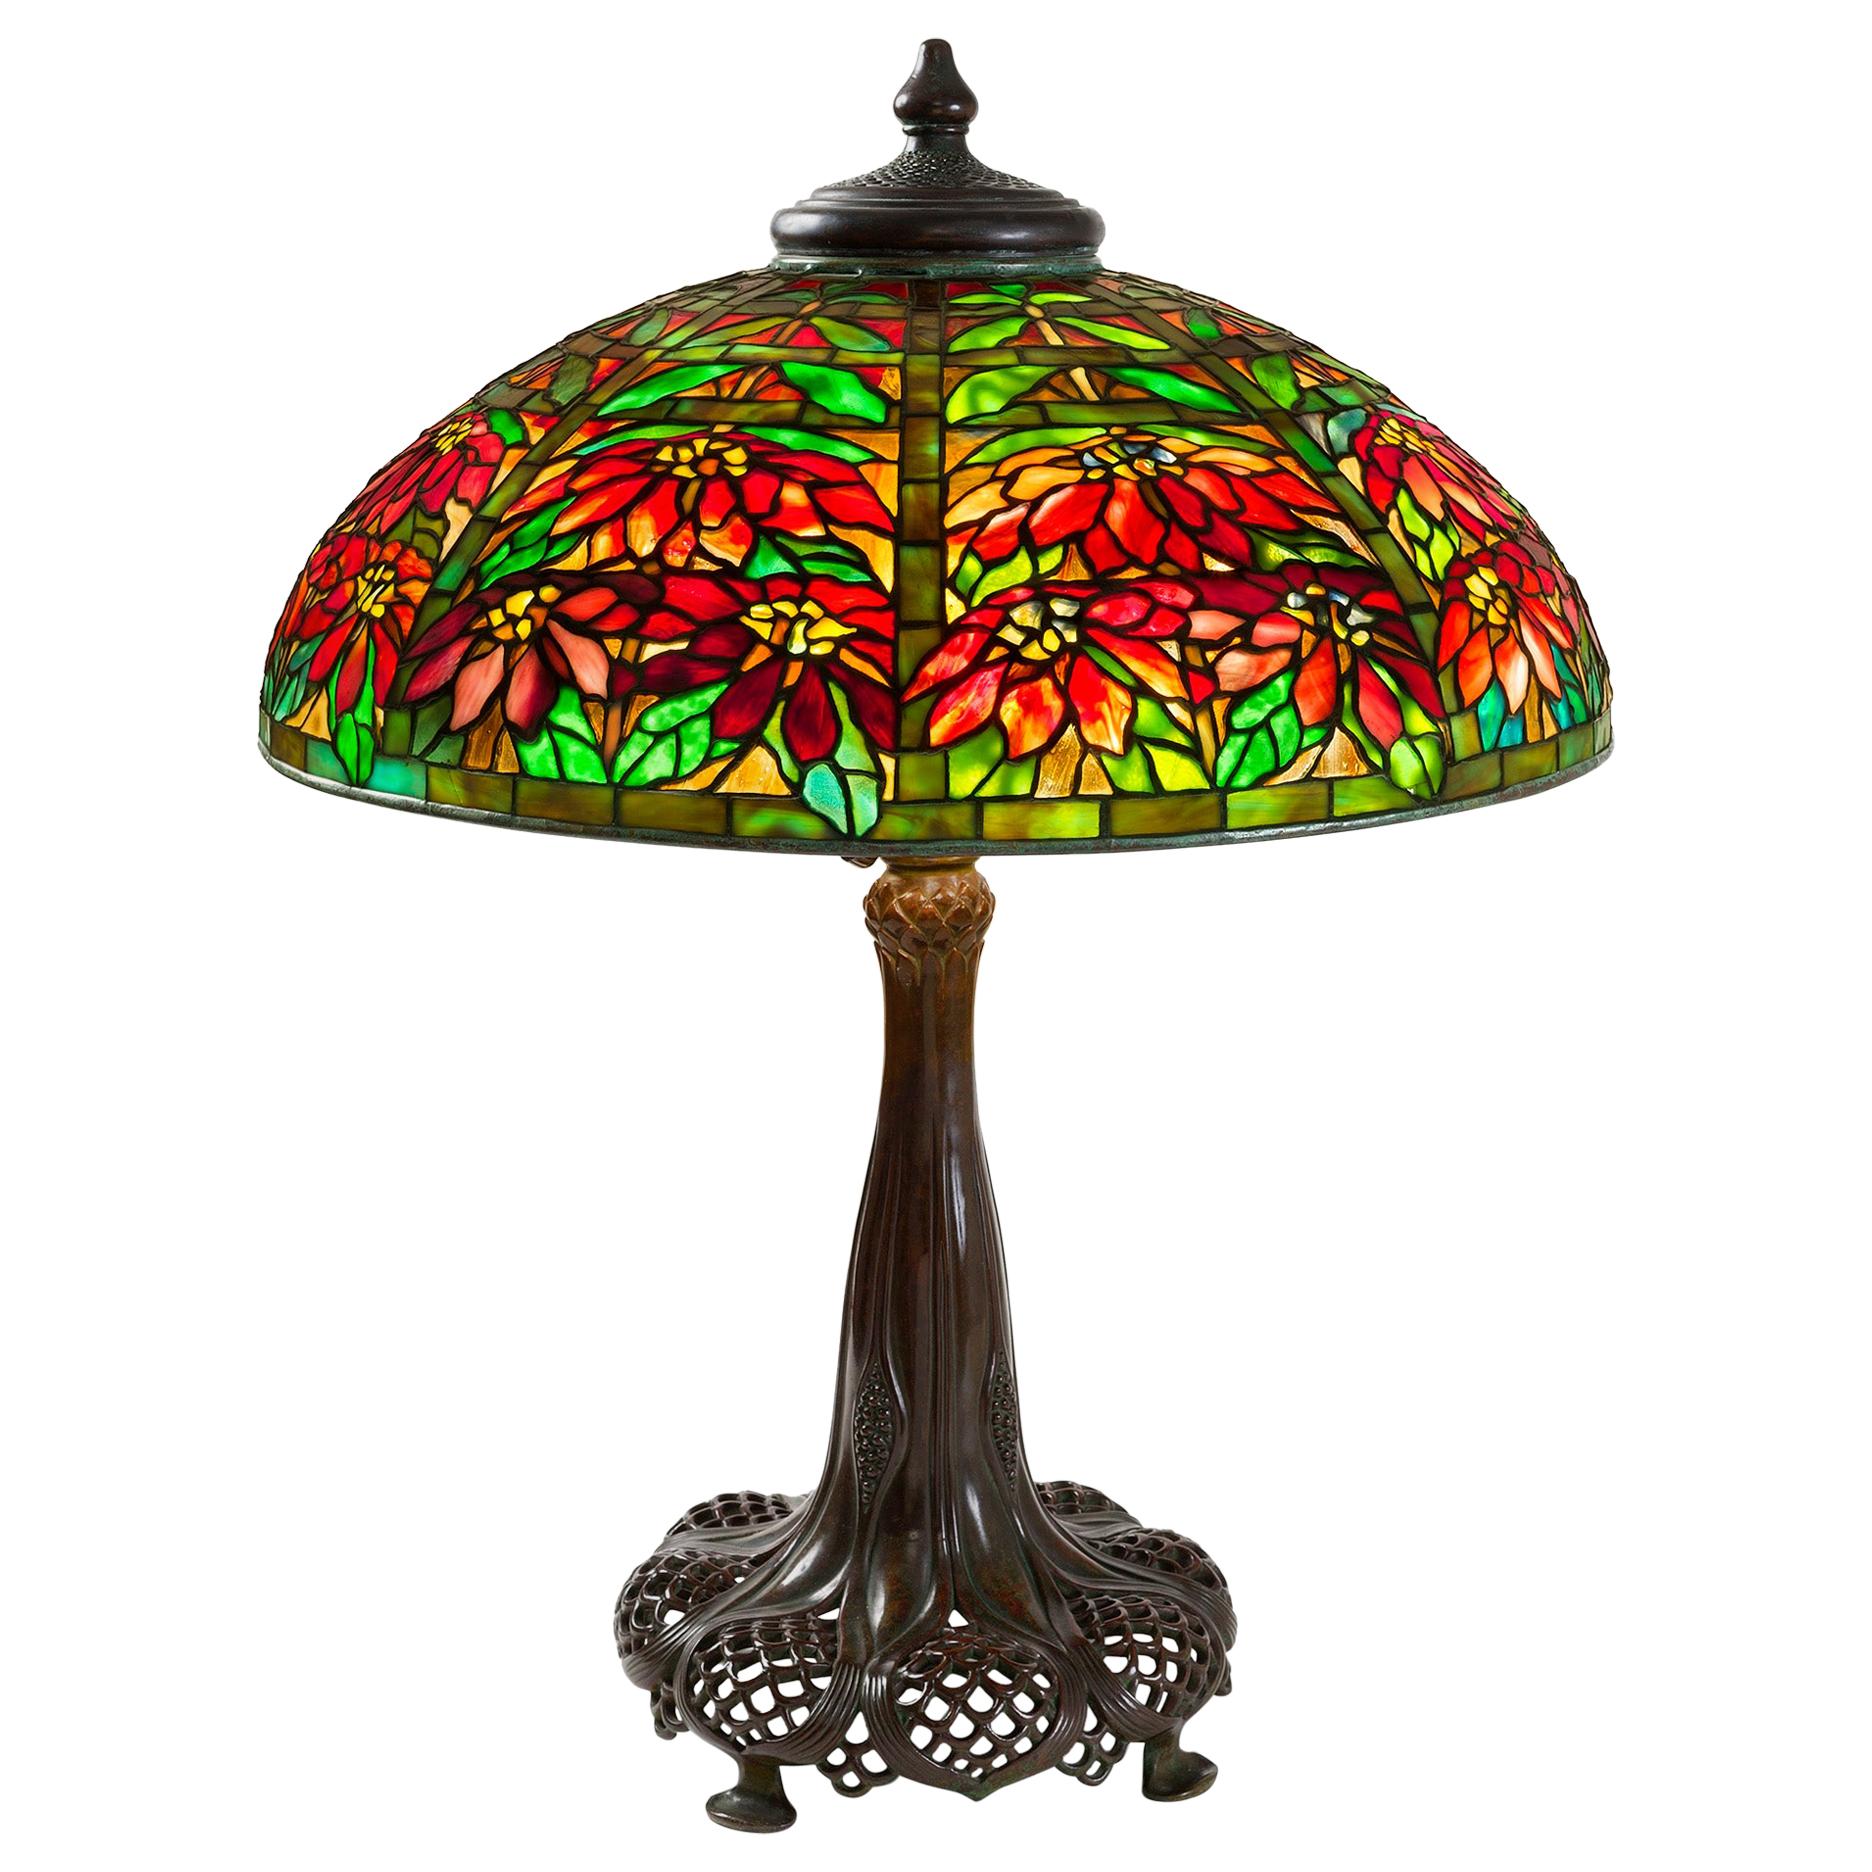 Tiffany Studios New York "Double Poinsettia" Table Lamp 